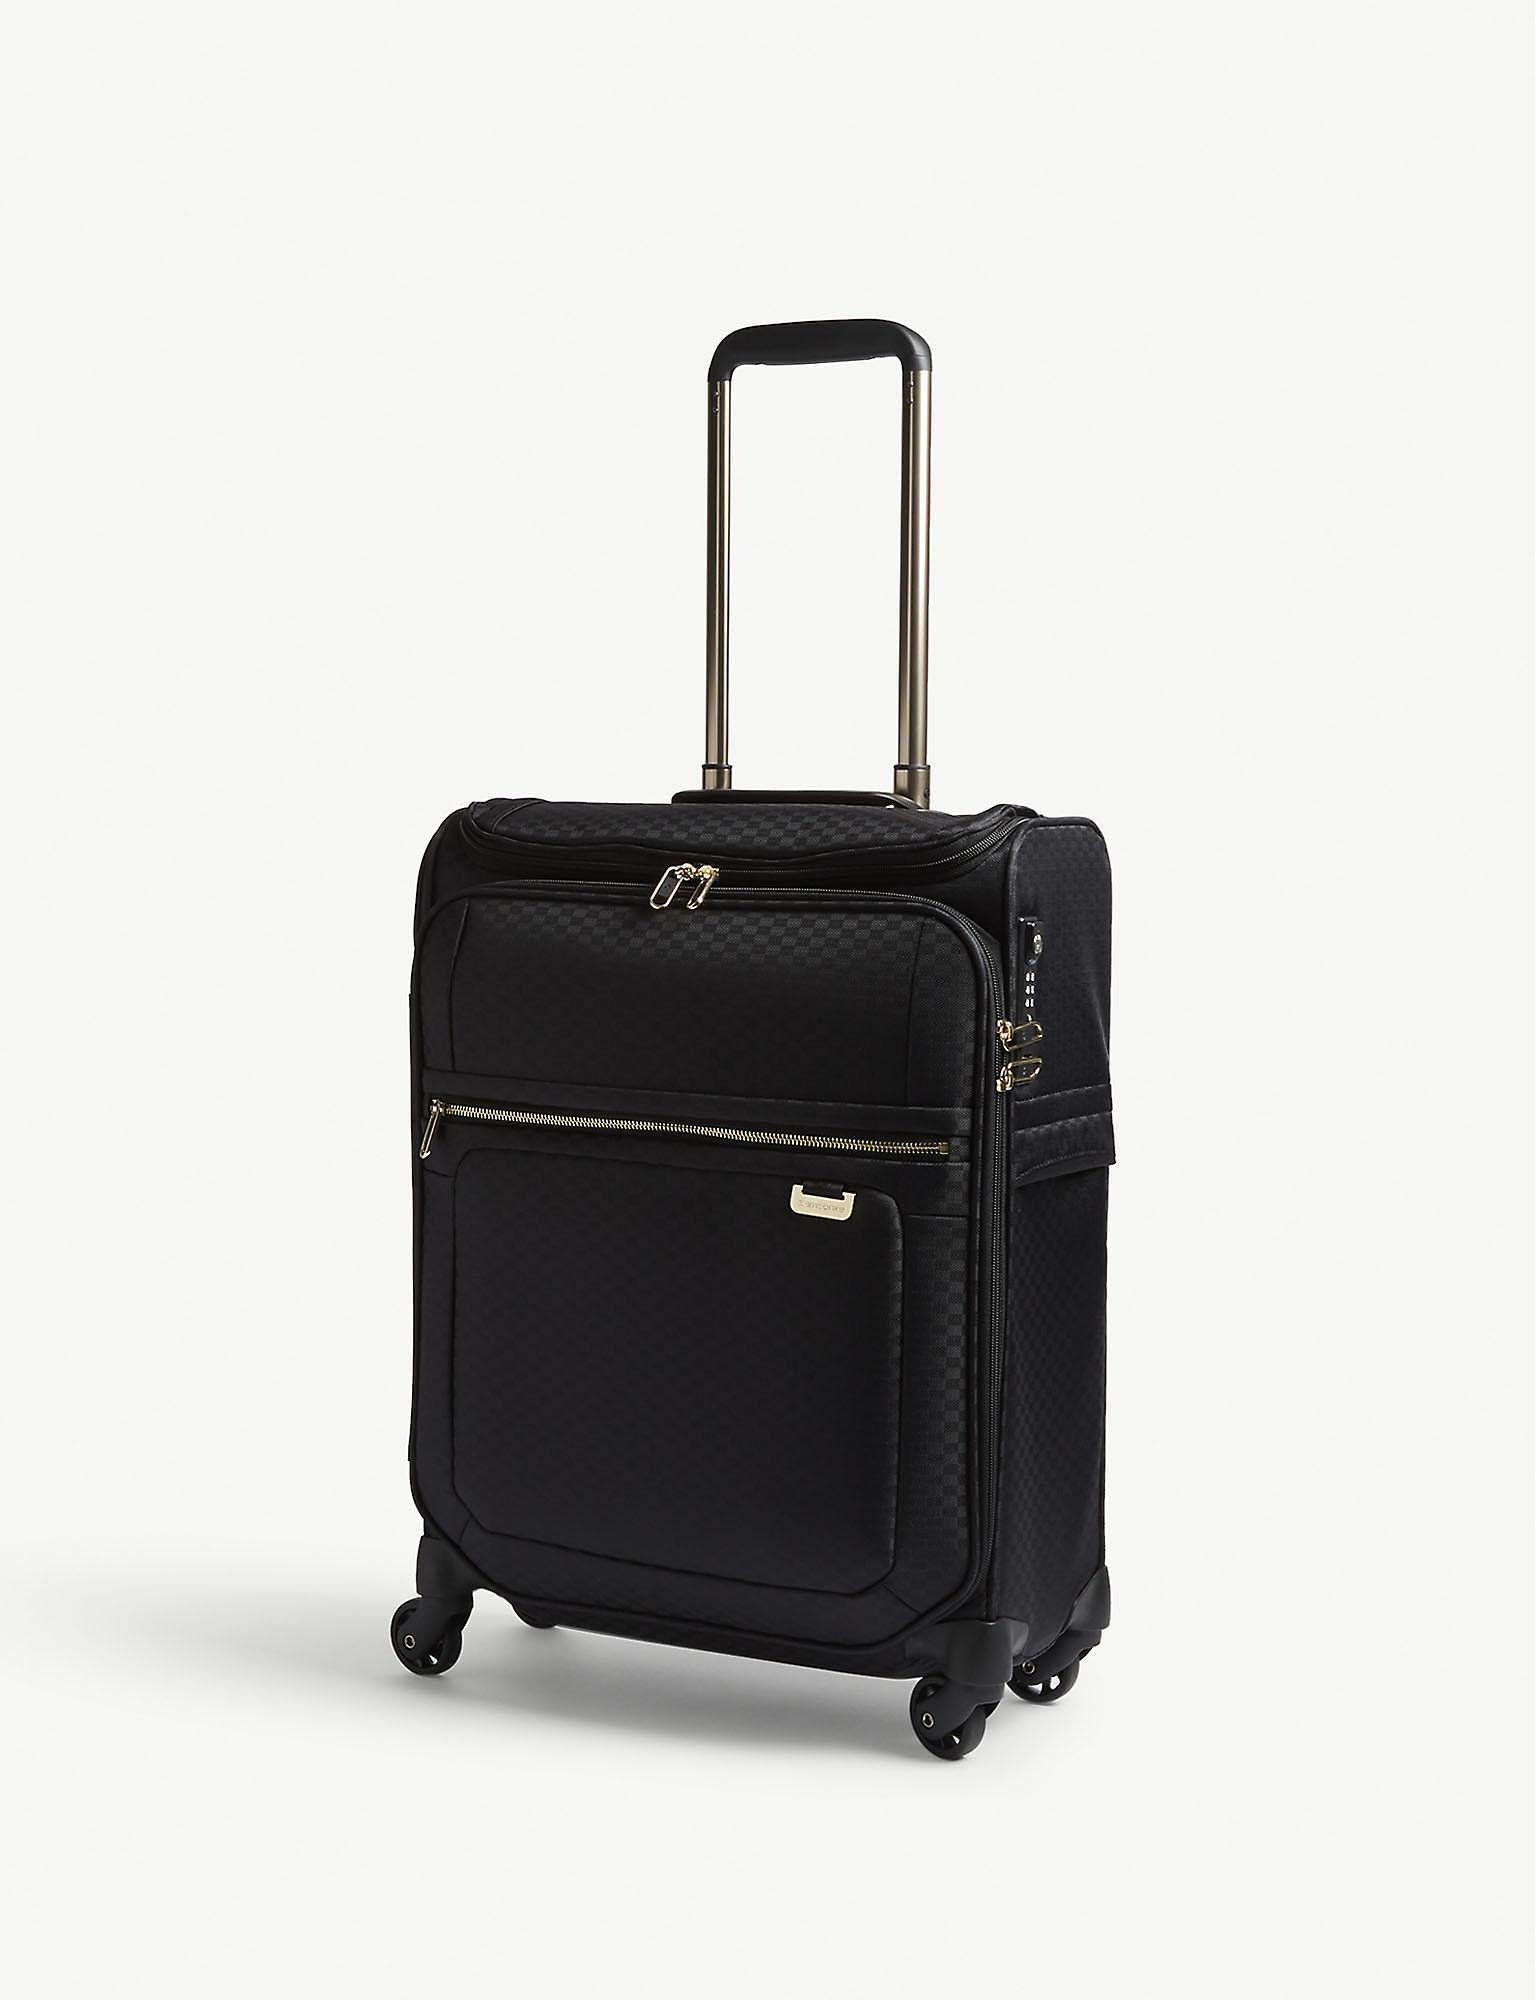 Samsonite Uplite Spinner Suitcase 55cm in Black/Gold (Black) - Lyst